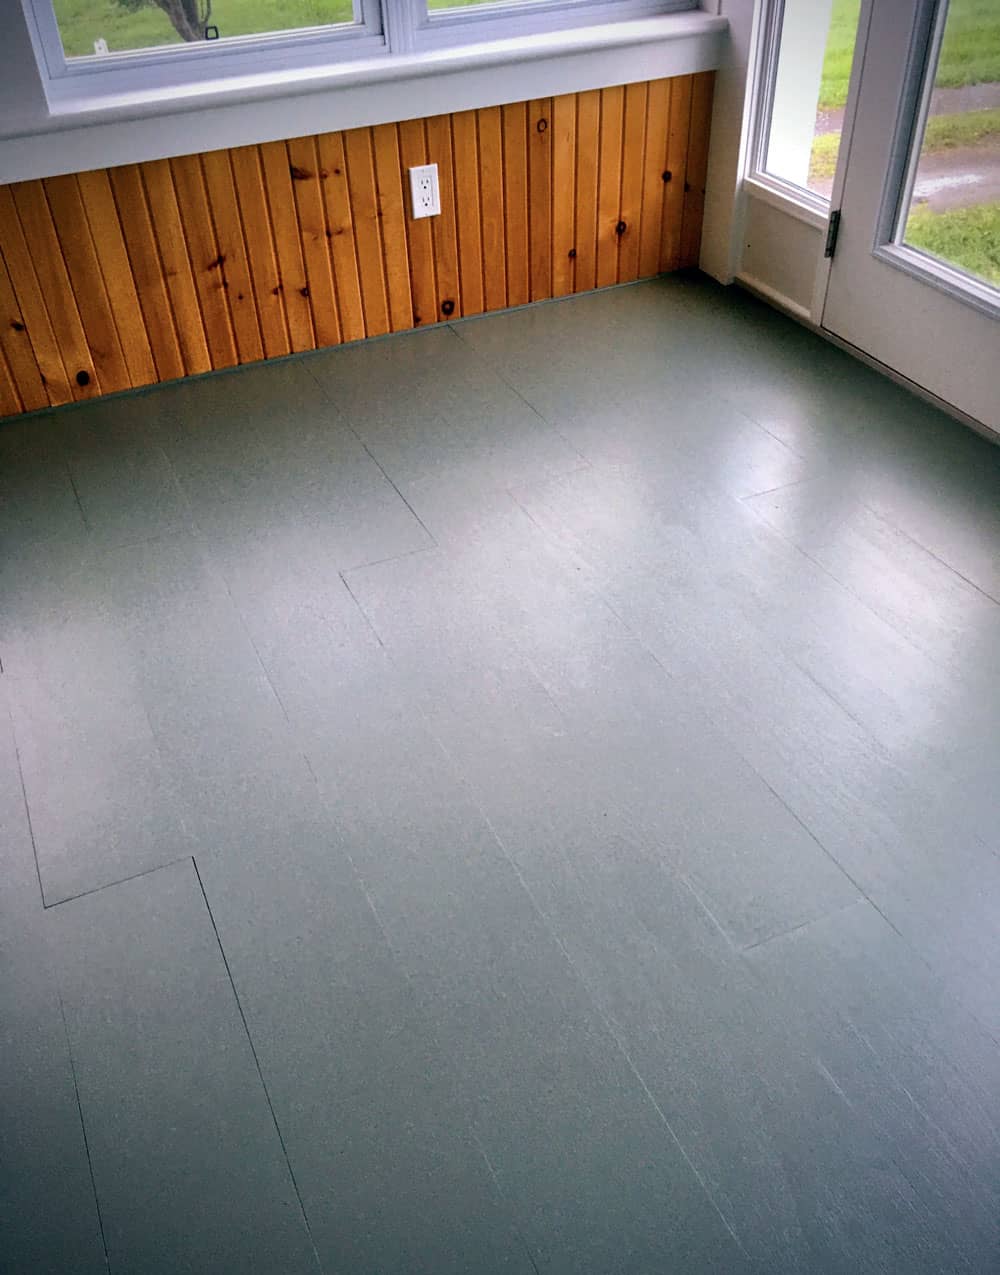 Install a plywood floor